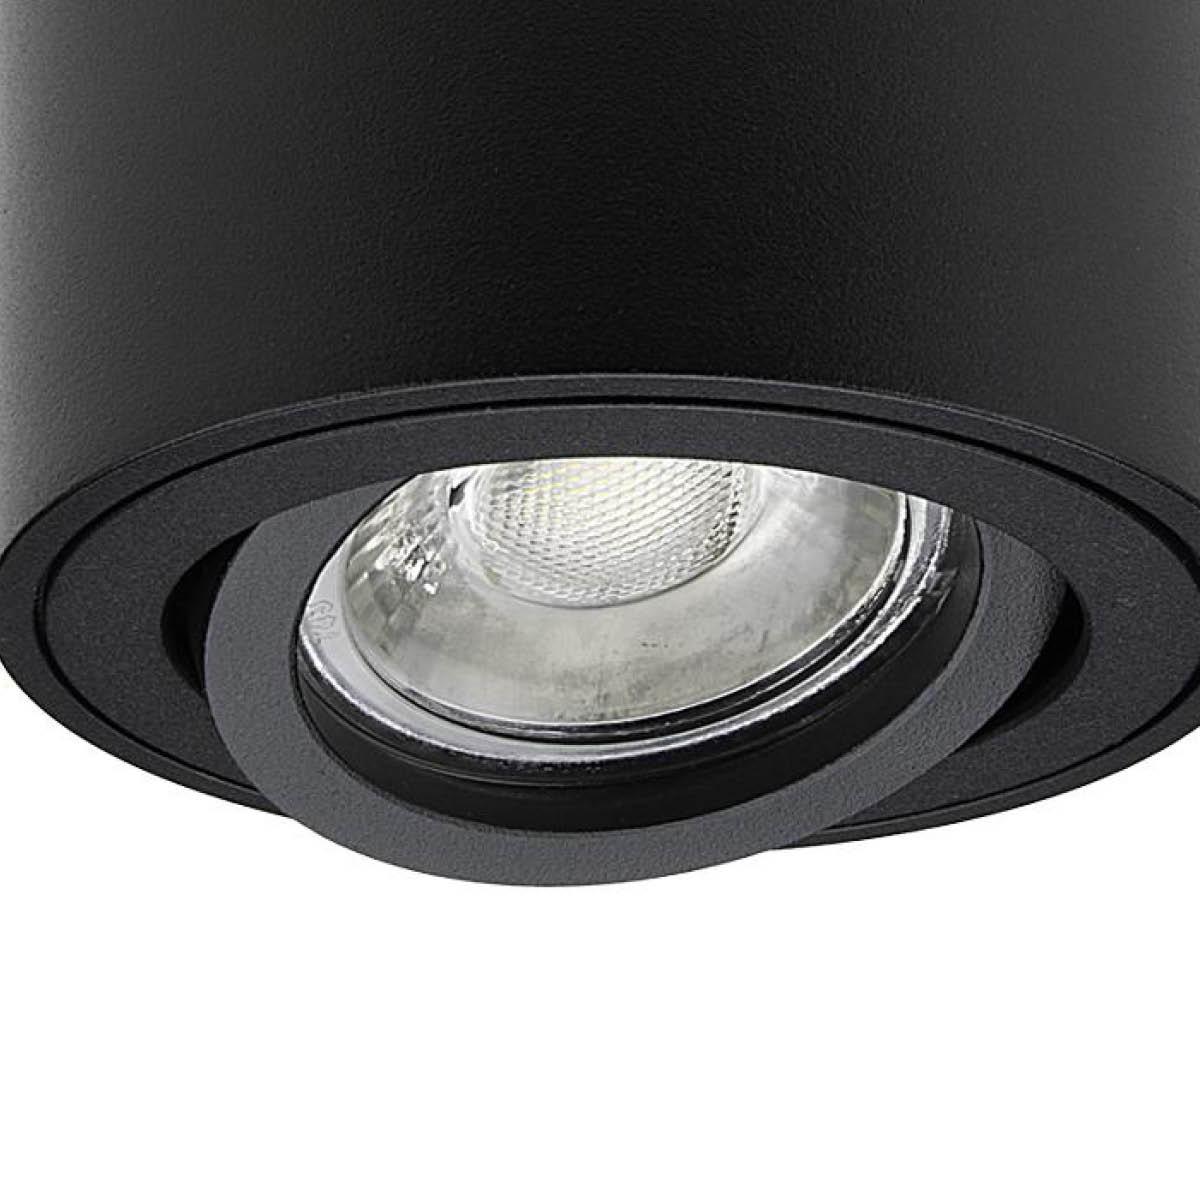 Runder Aufbaustrahler schwarz schwenkbar Deckenbeleuchtung - LED Leuchtmittel:  GU10 3W RGBW 230V dimmbar 60°